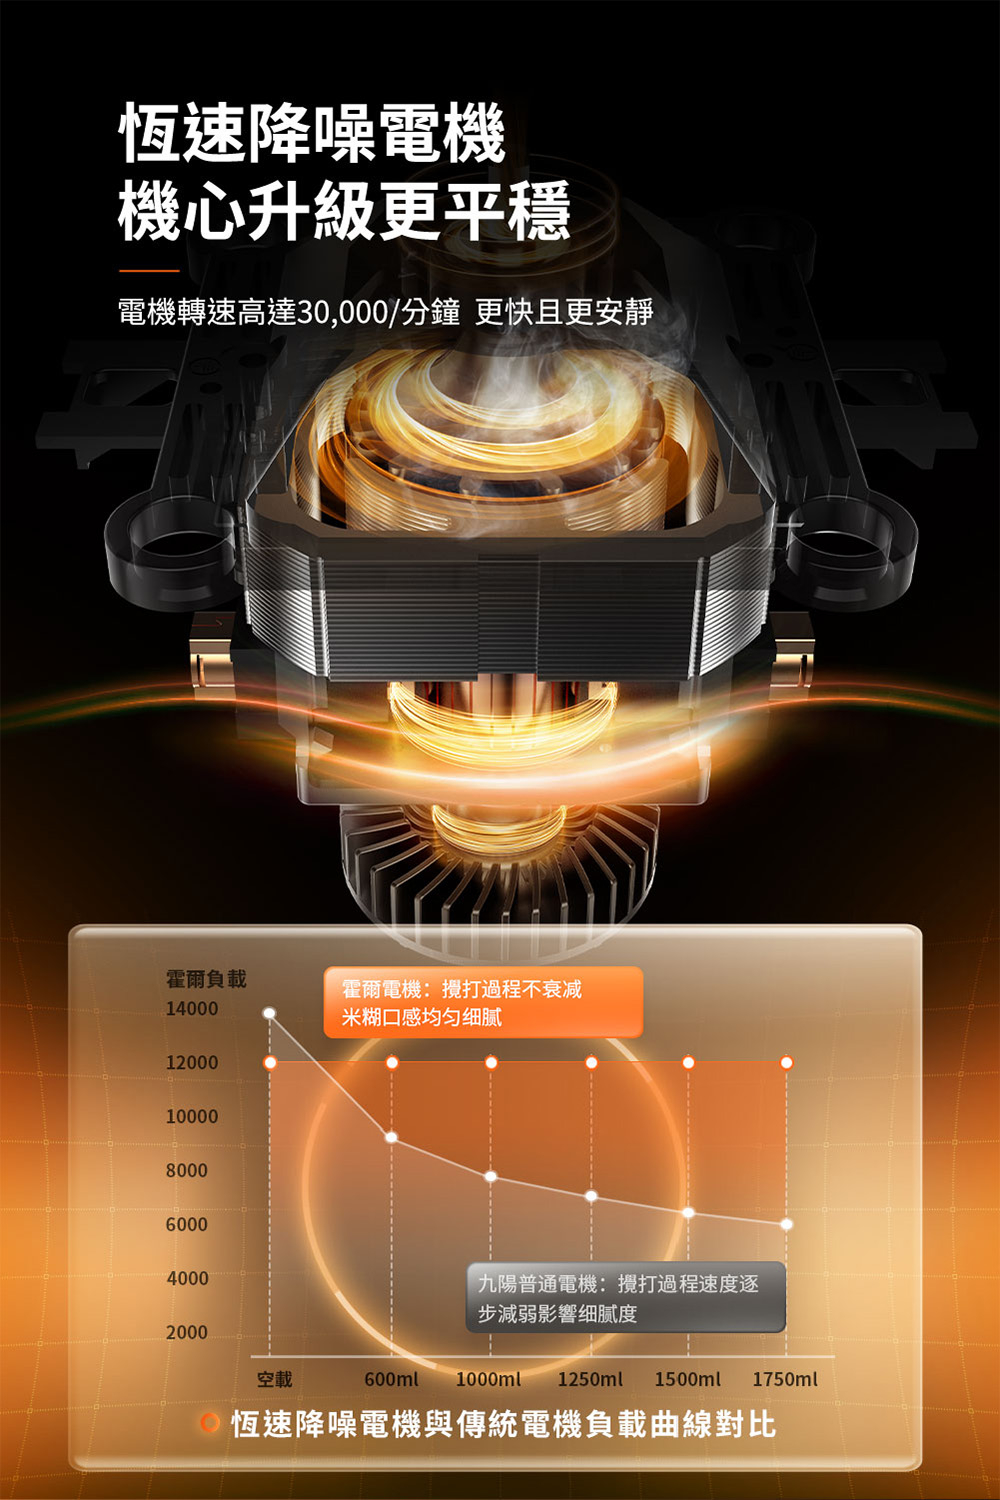 JOYOUNG L18-Y77M High Speed Blender, heating